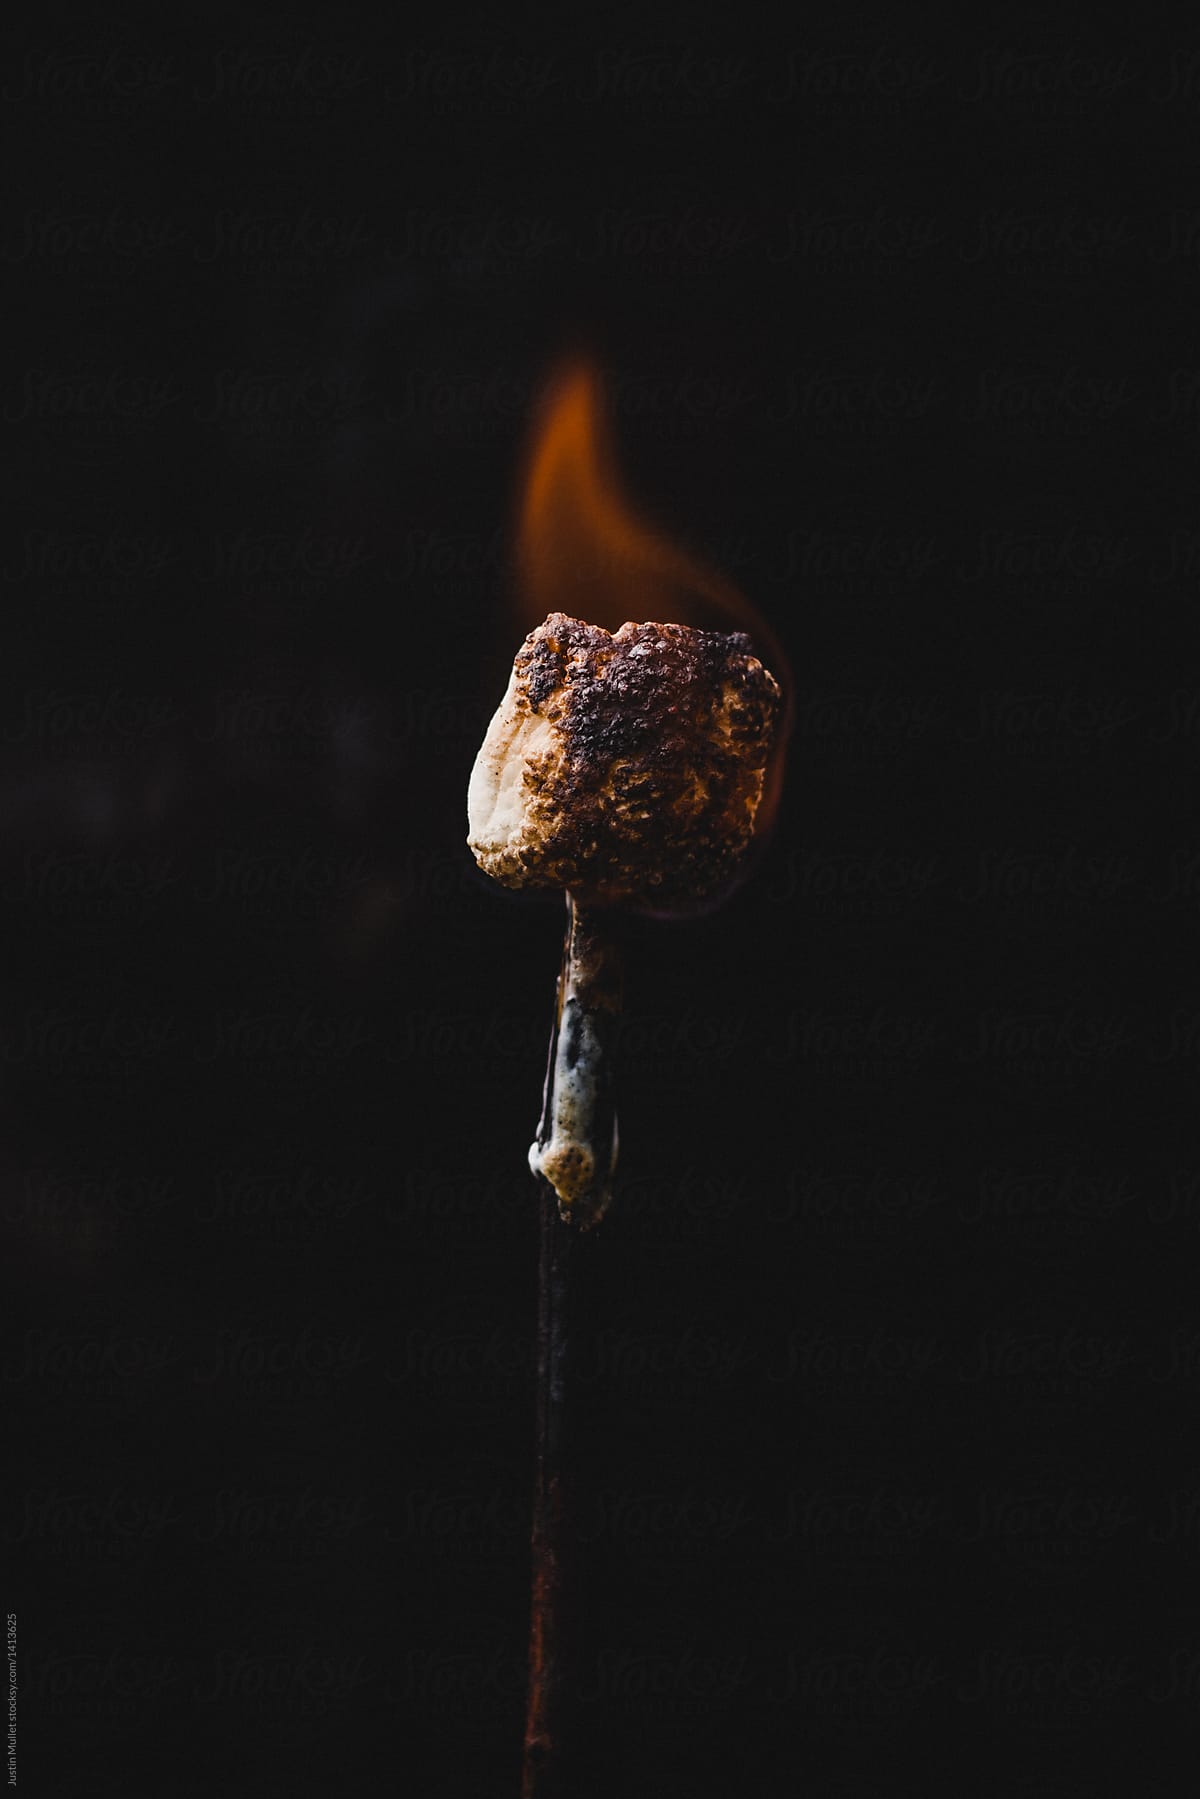 Roasted marshmallow burning on a stick